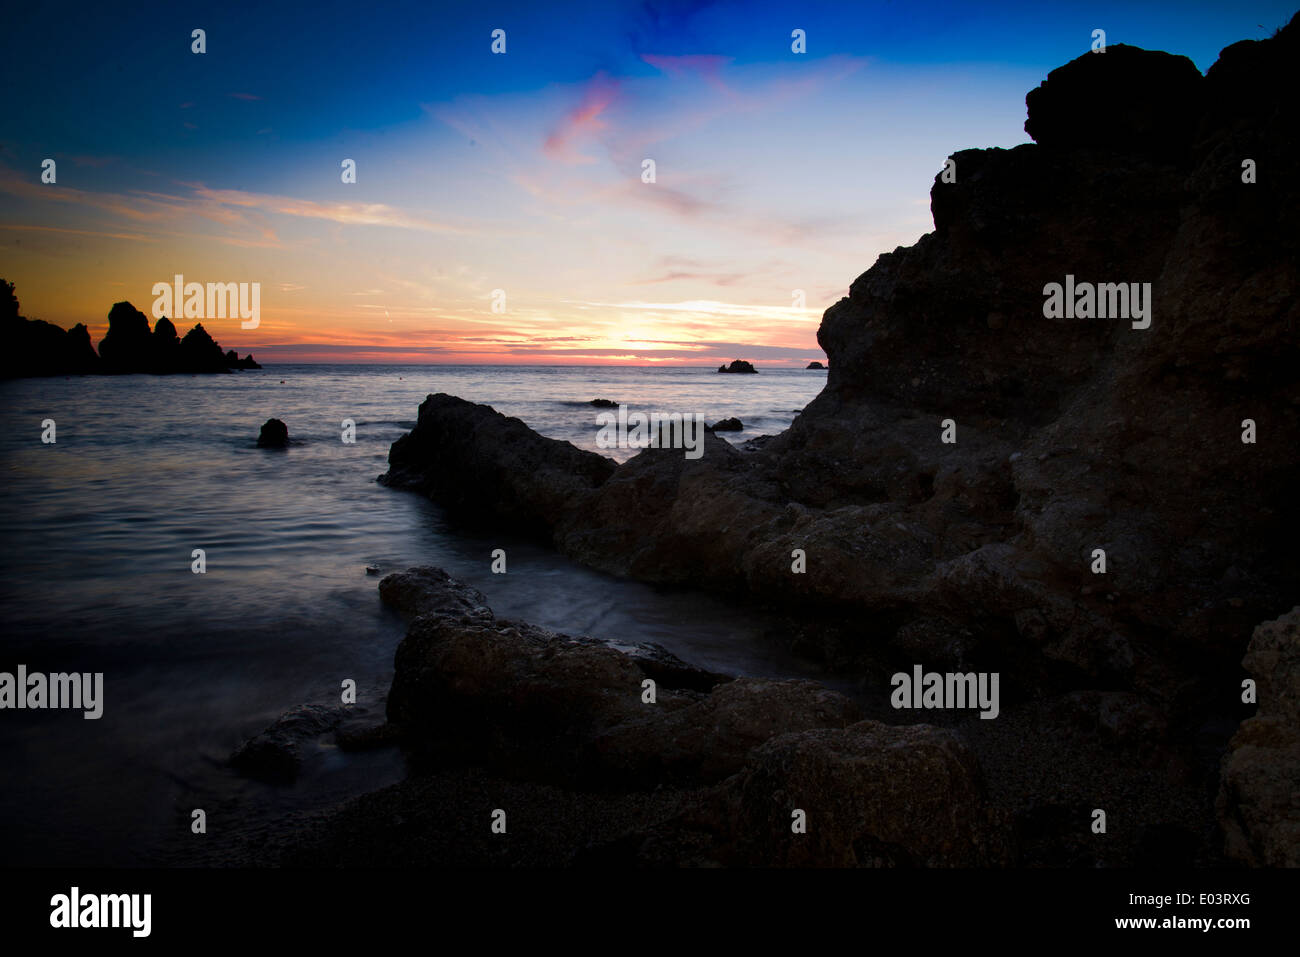 Sunset over the Ionian sea, Mediterranean Stock Photo